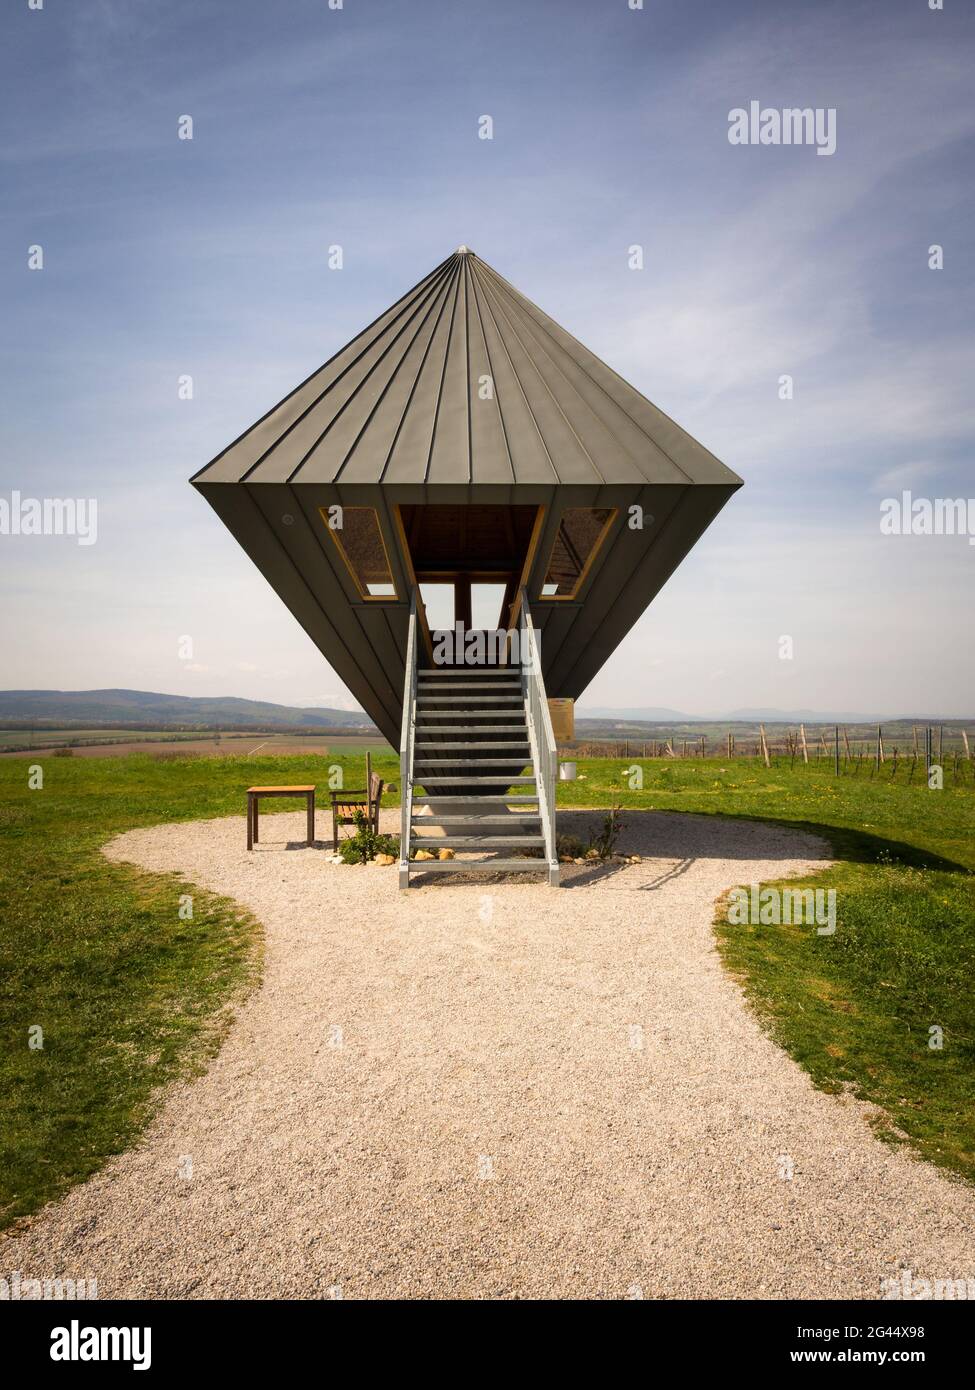 Observation tower oktaeder at sigless Burgenland Austria Stock Photo